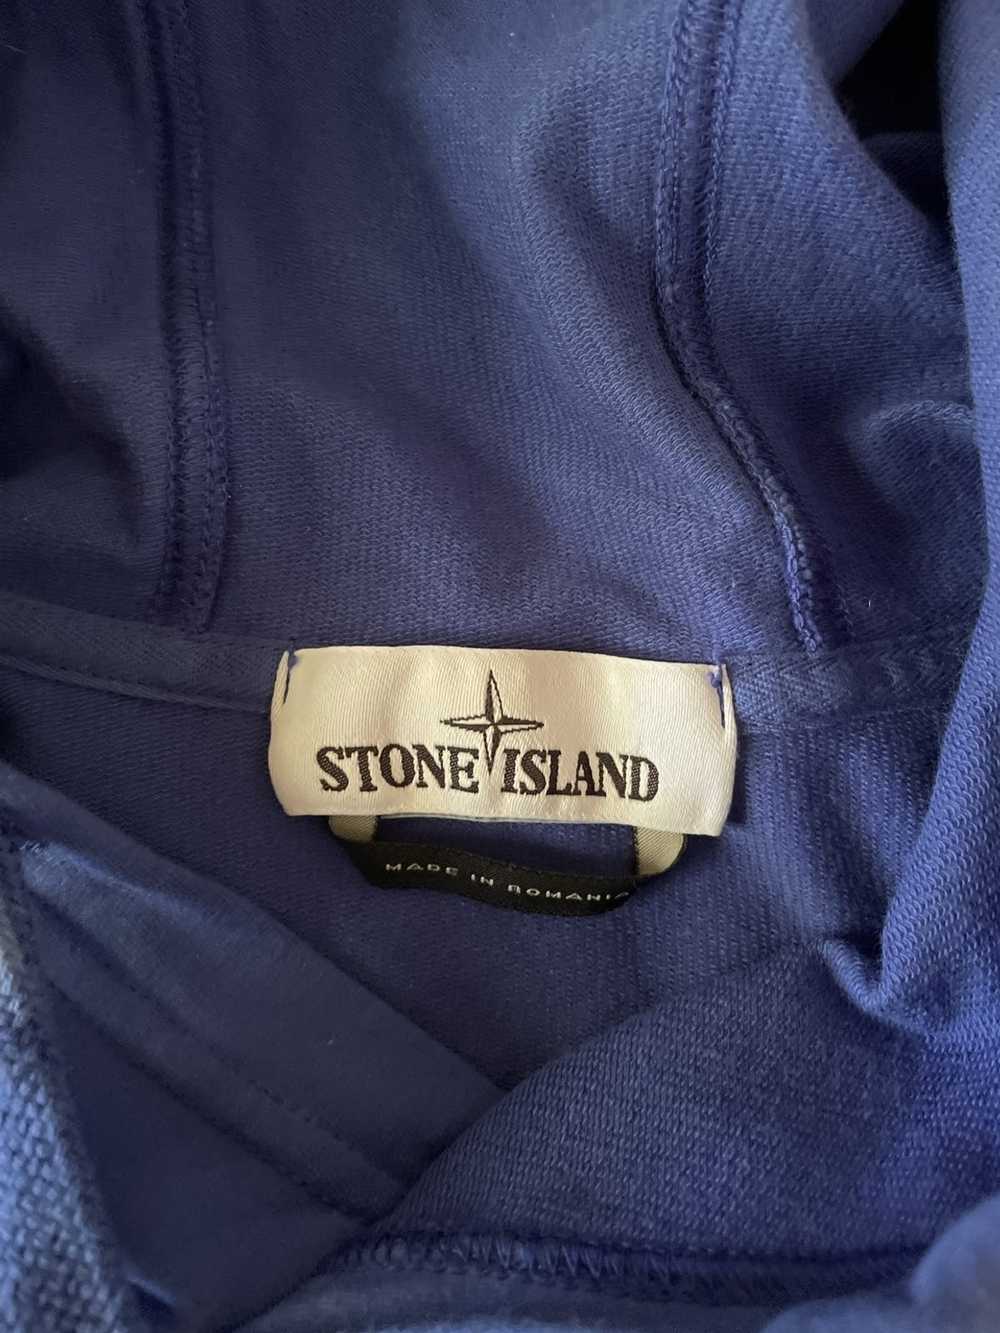 Stone Island Stone island hoody - image 3